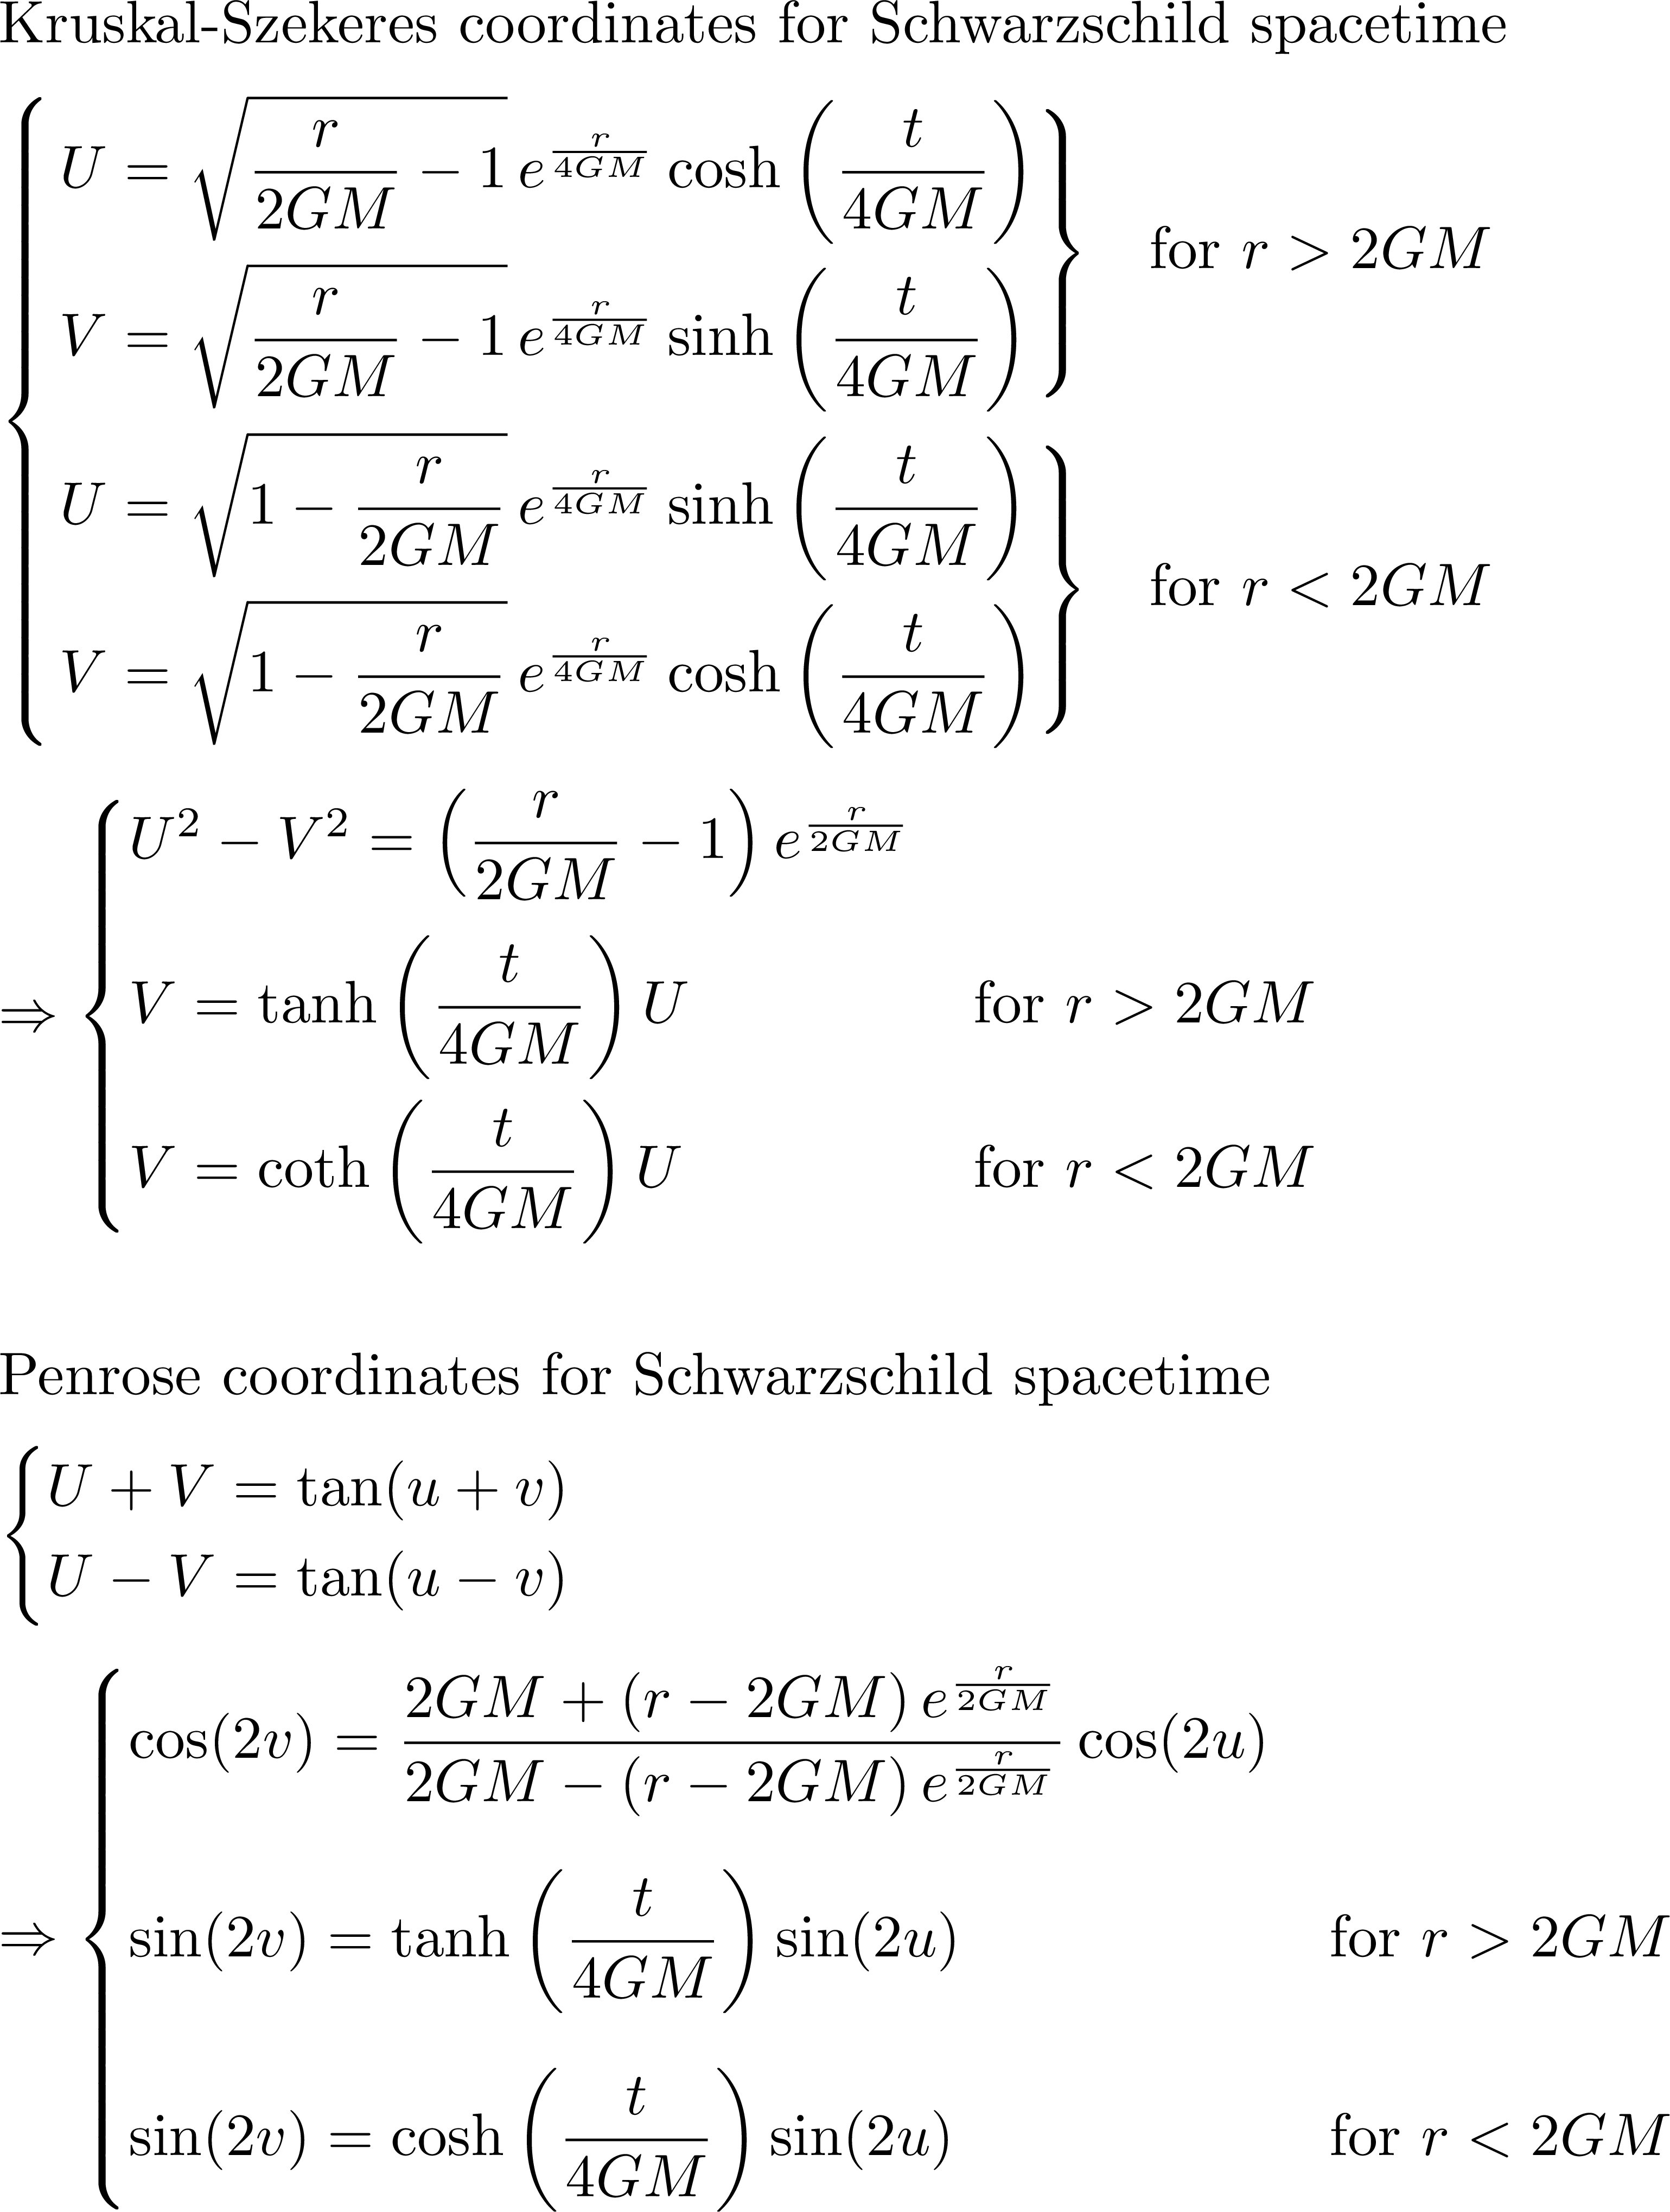 Penrose coordinates of Kruskal-Szekeres coordinates.